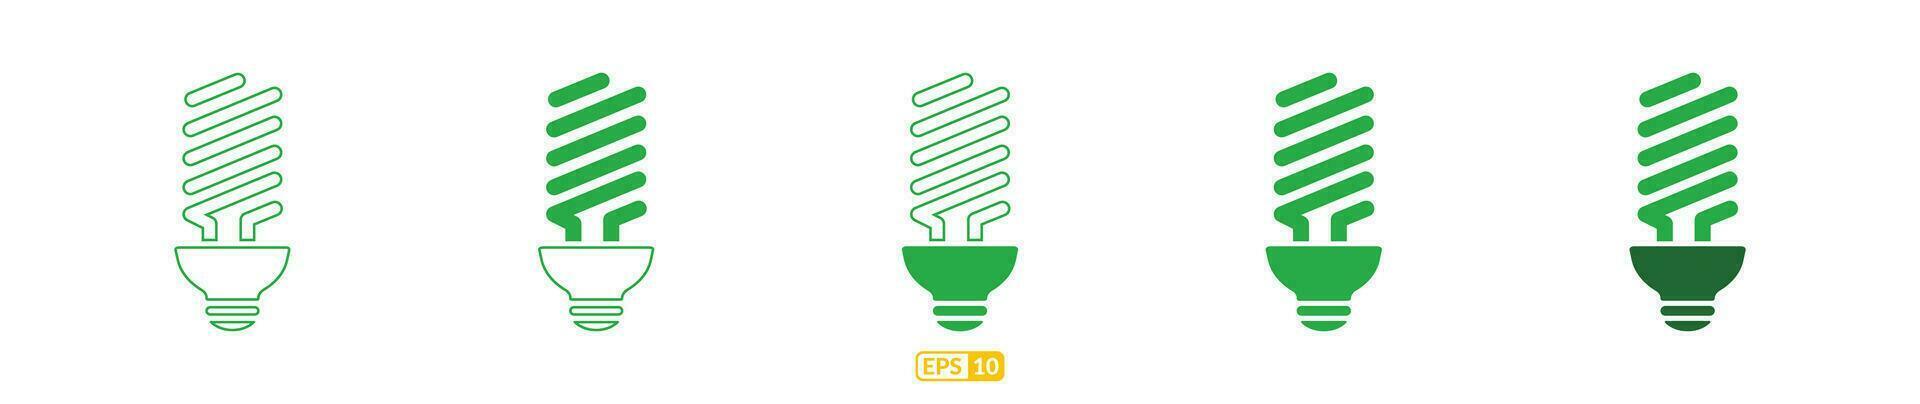 Ecology green led bulb icon set eps10 vector